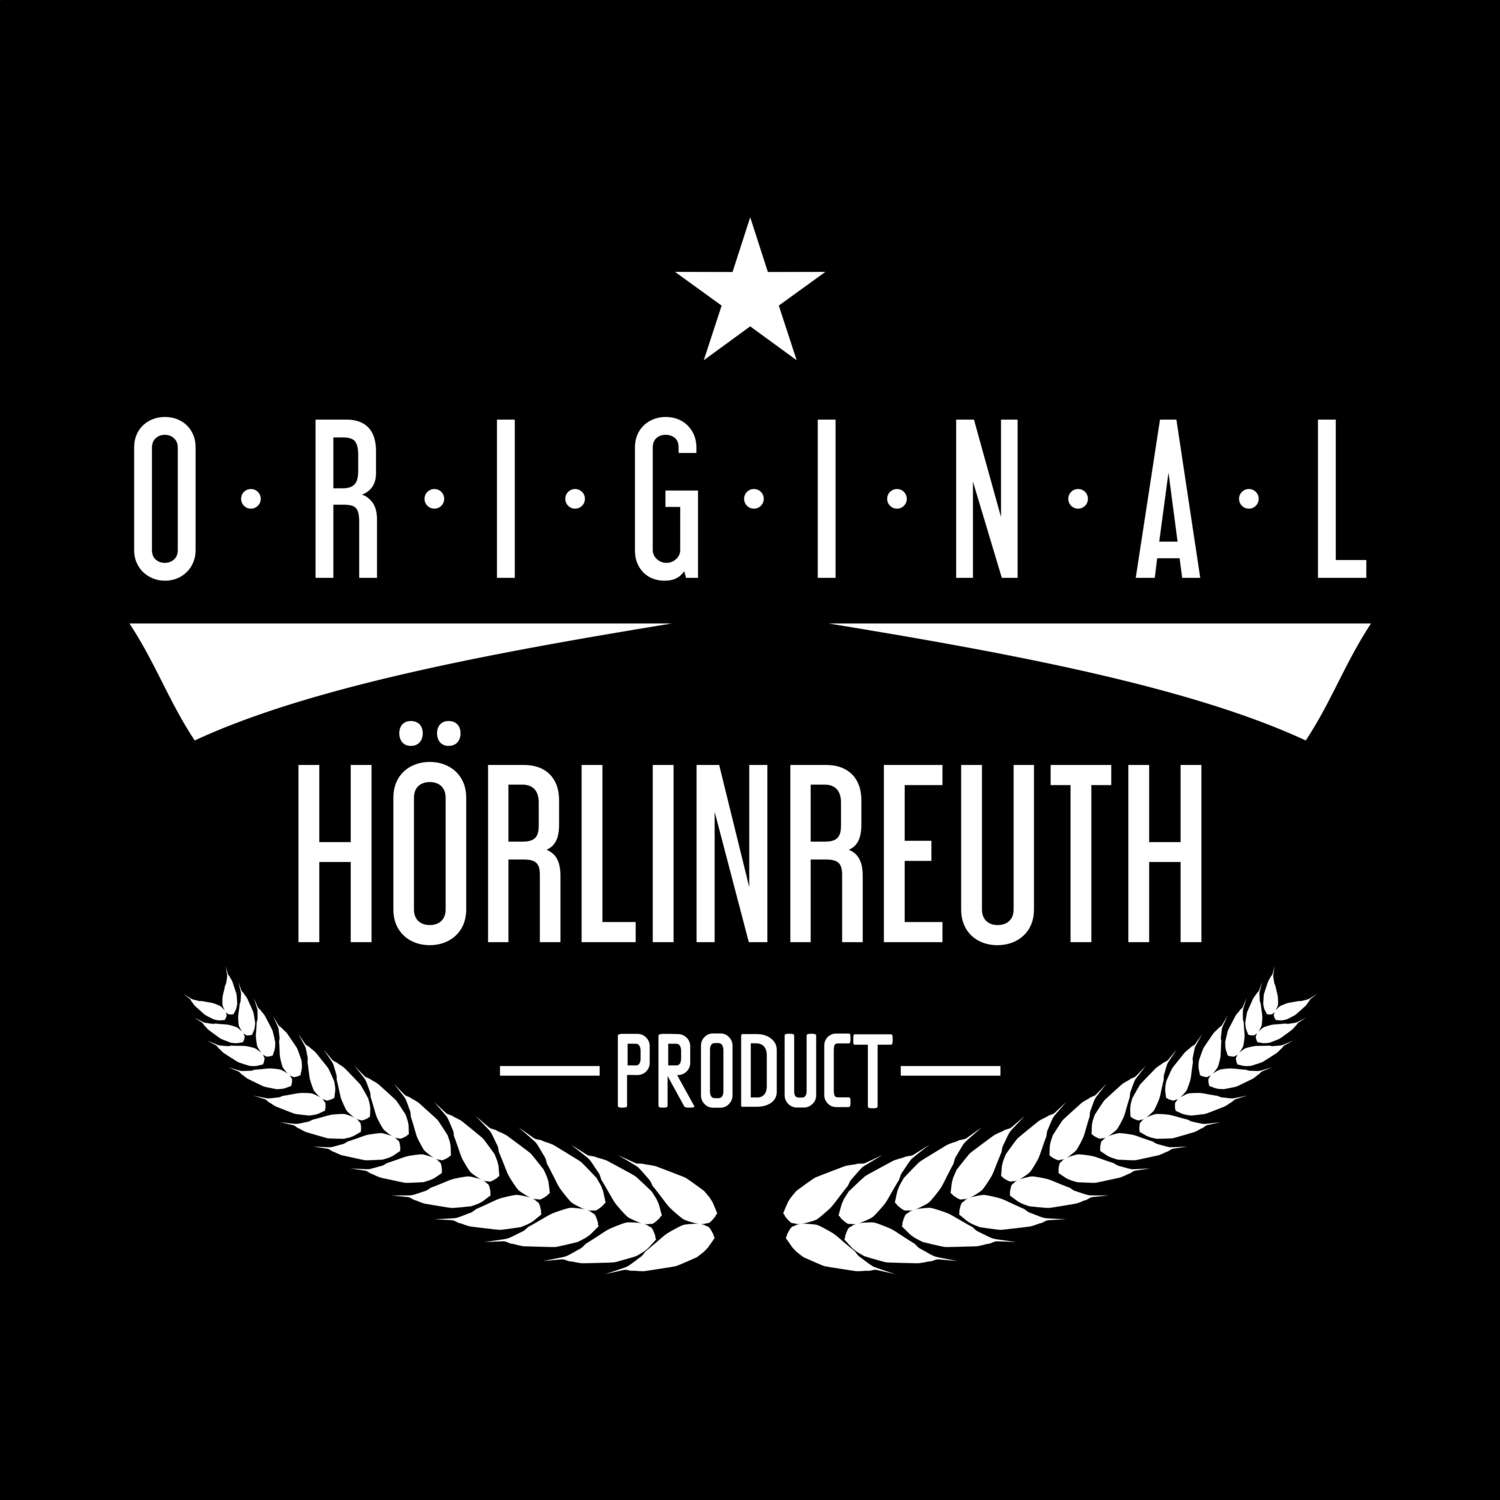 Hörlinreuth T-Shirt »Original Product«